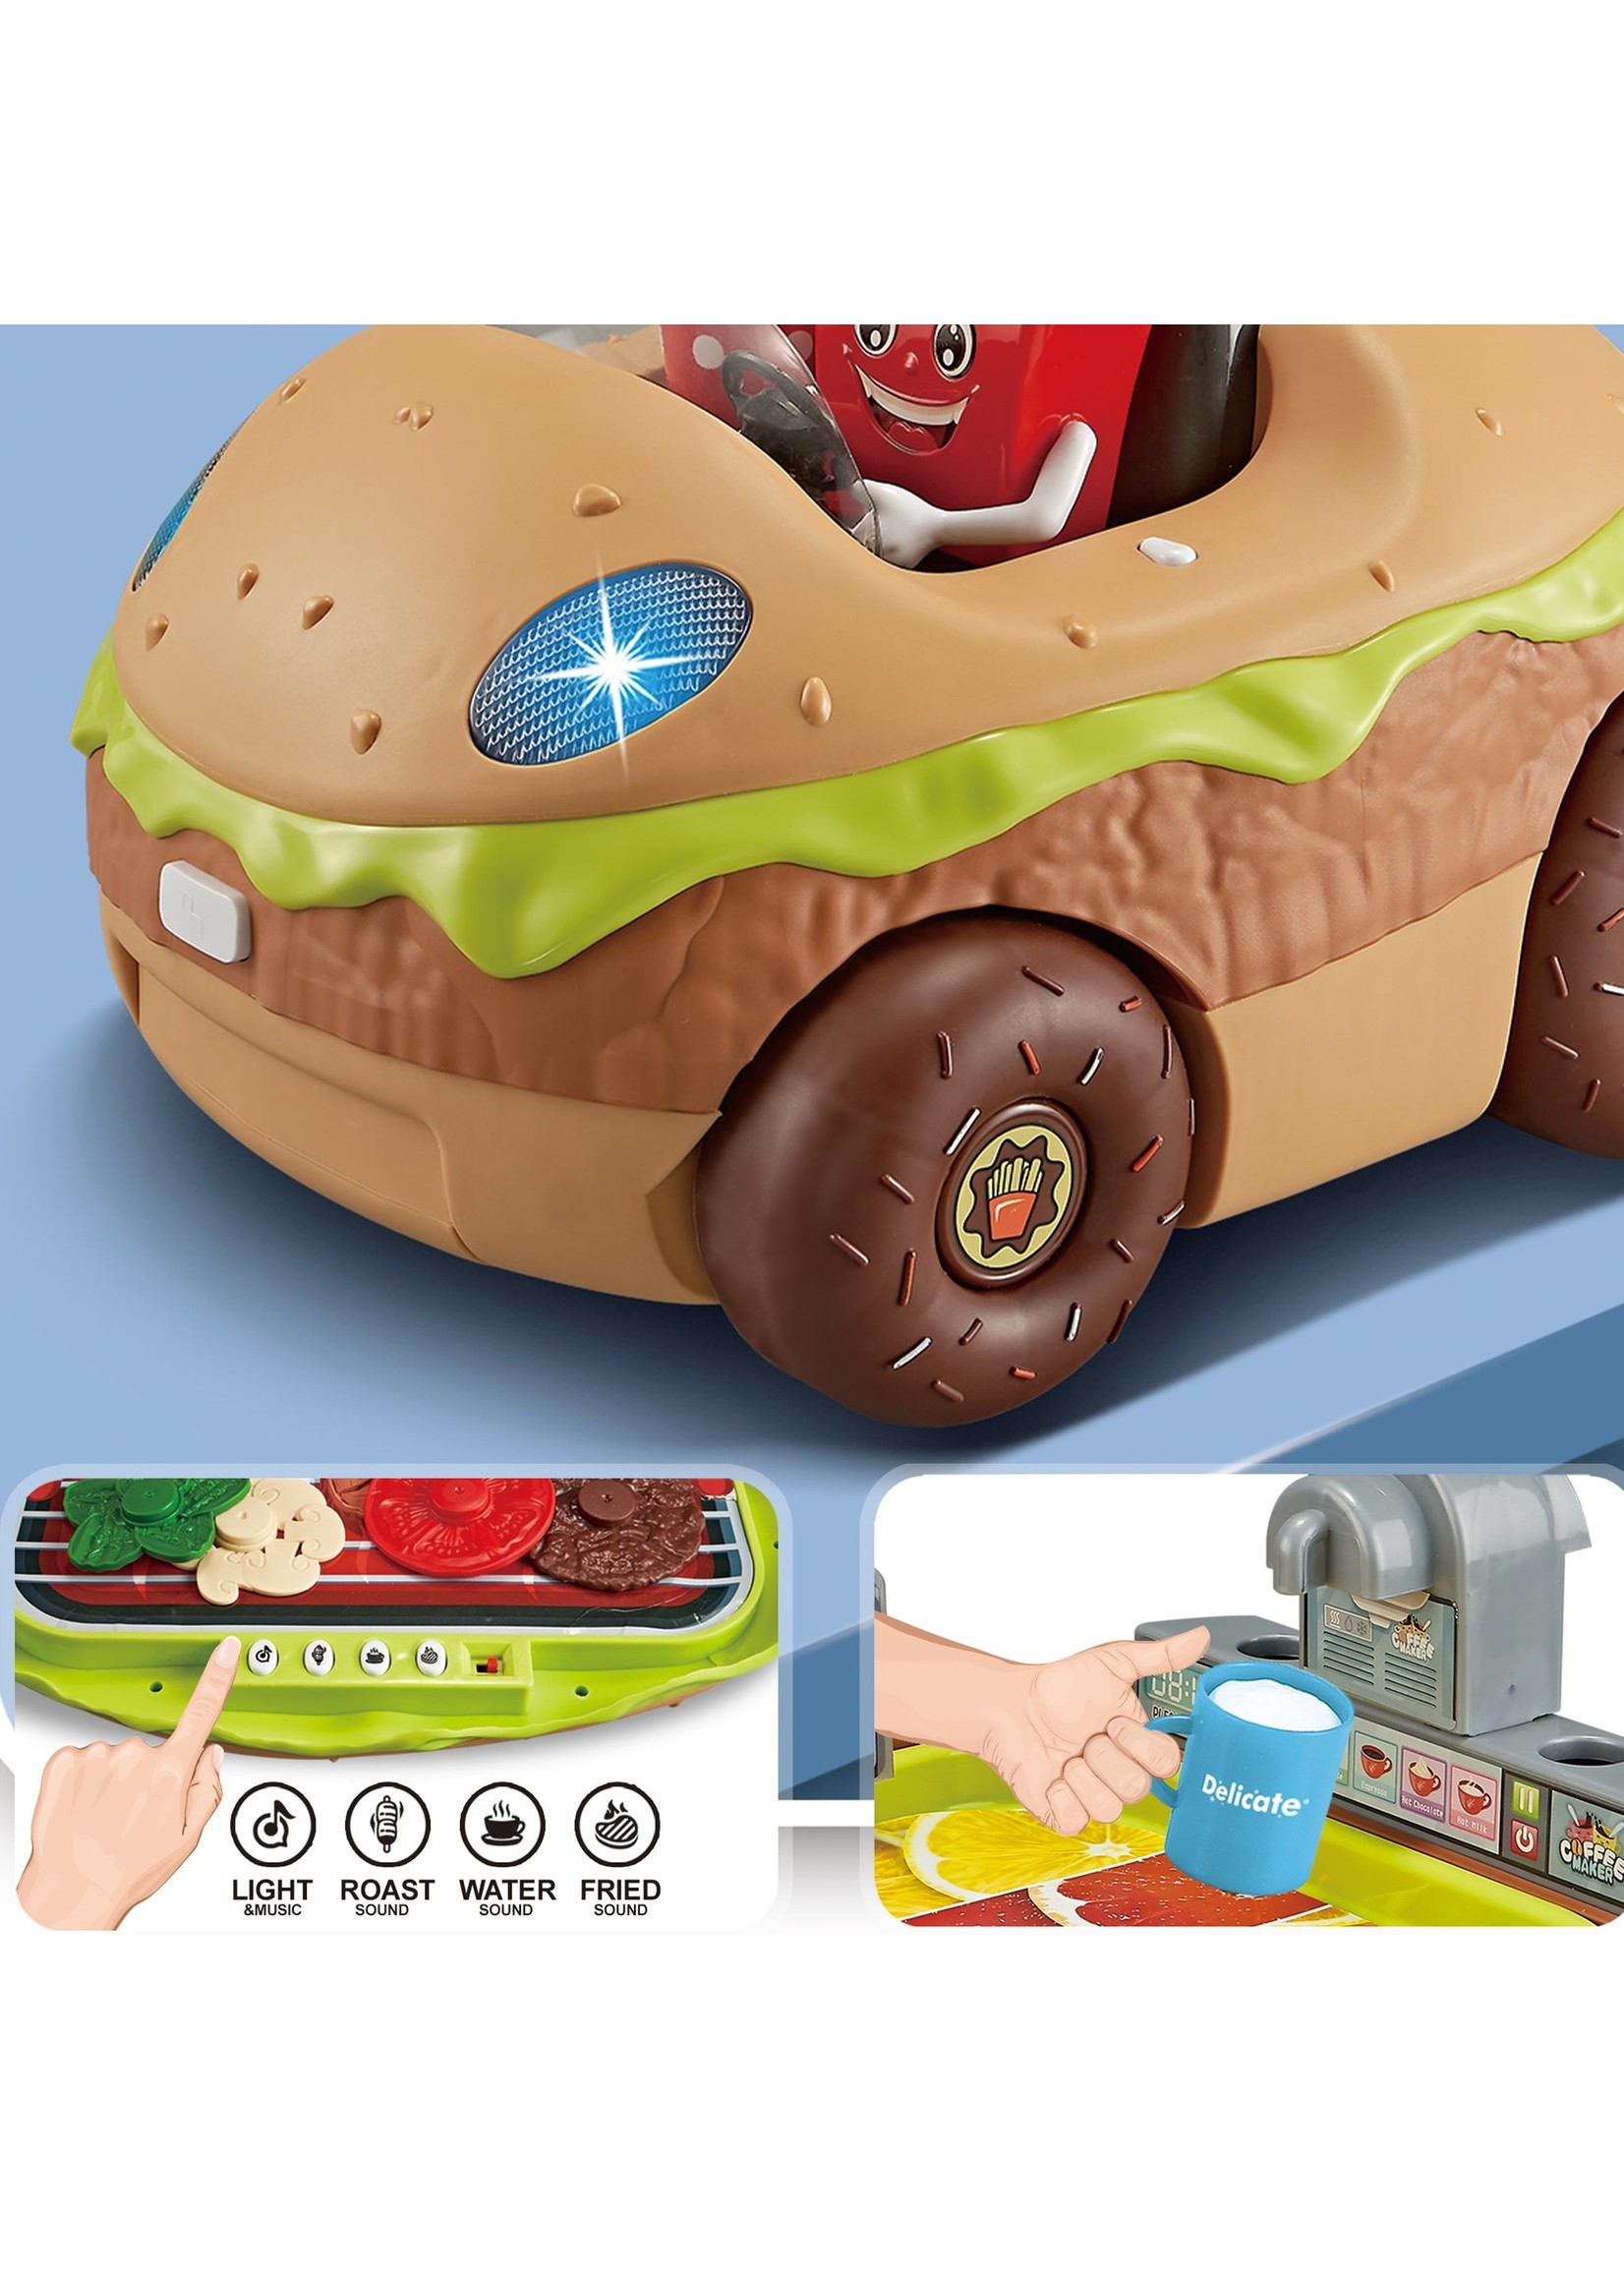 Thin Air 3 in 1 Kitchen Playset - Burger Car Food Truck